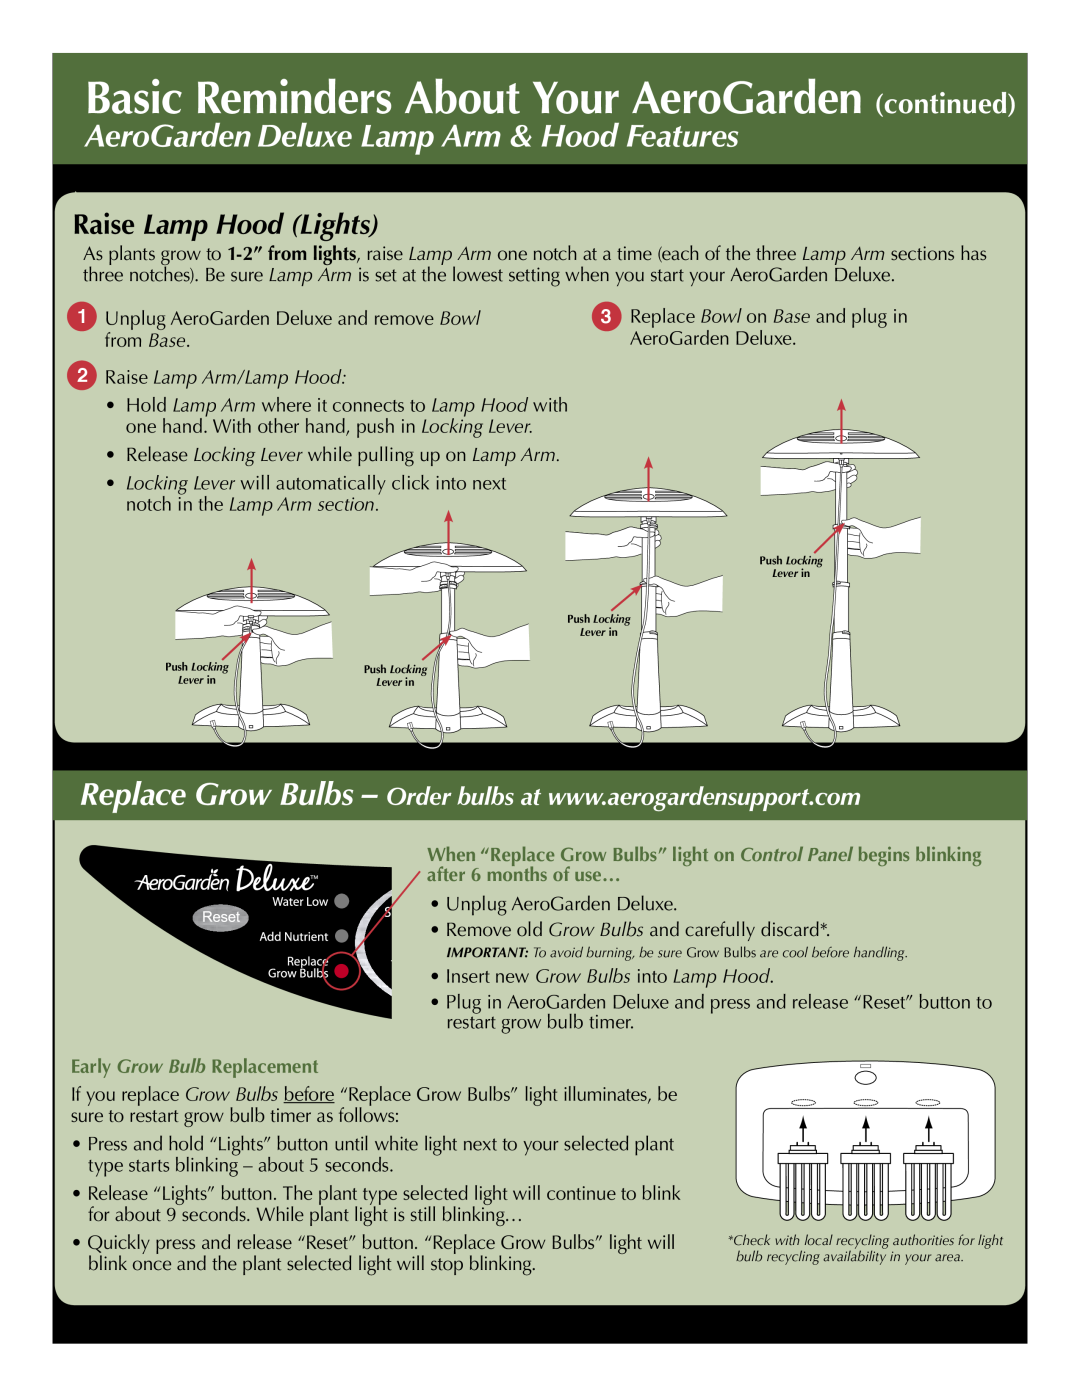 AeroGarden 100733-WHT Basic Reminders About Your AeroGarden continued, Raise Lamp Hood Lights, 2Raise Lamp Arm/Lamp Hood 